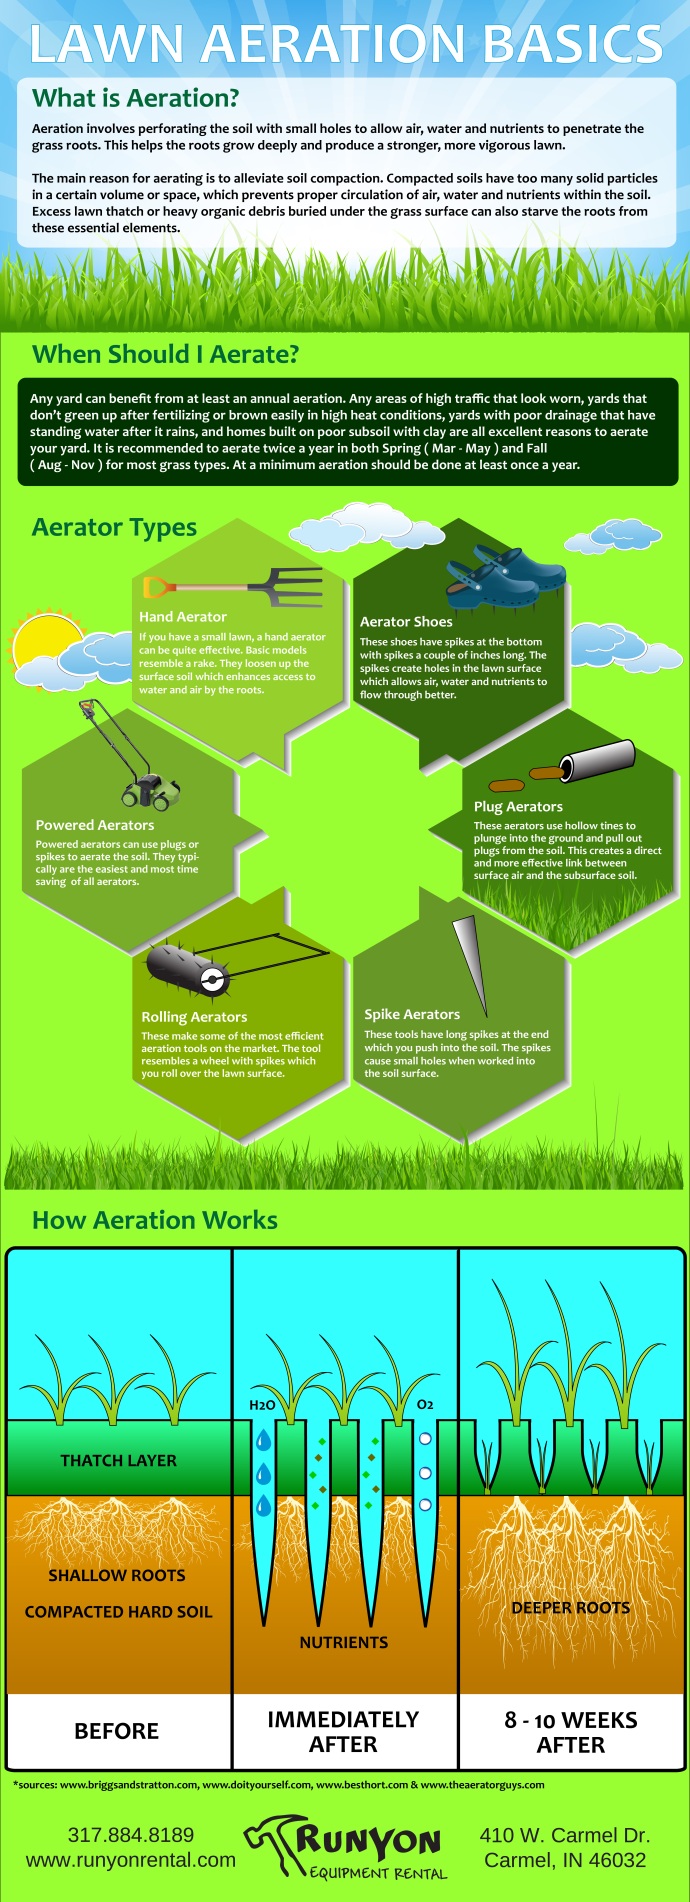 Lawn Aeration Basics Infographic